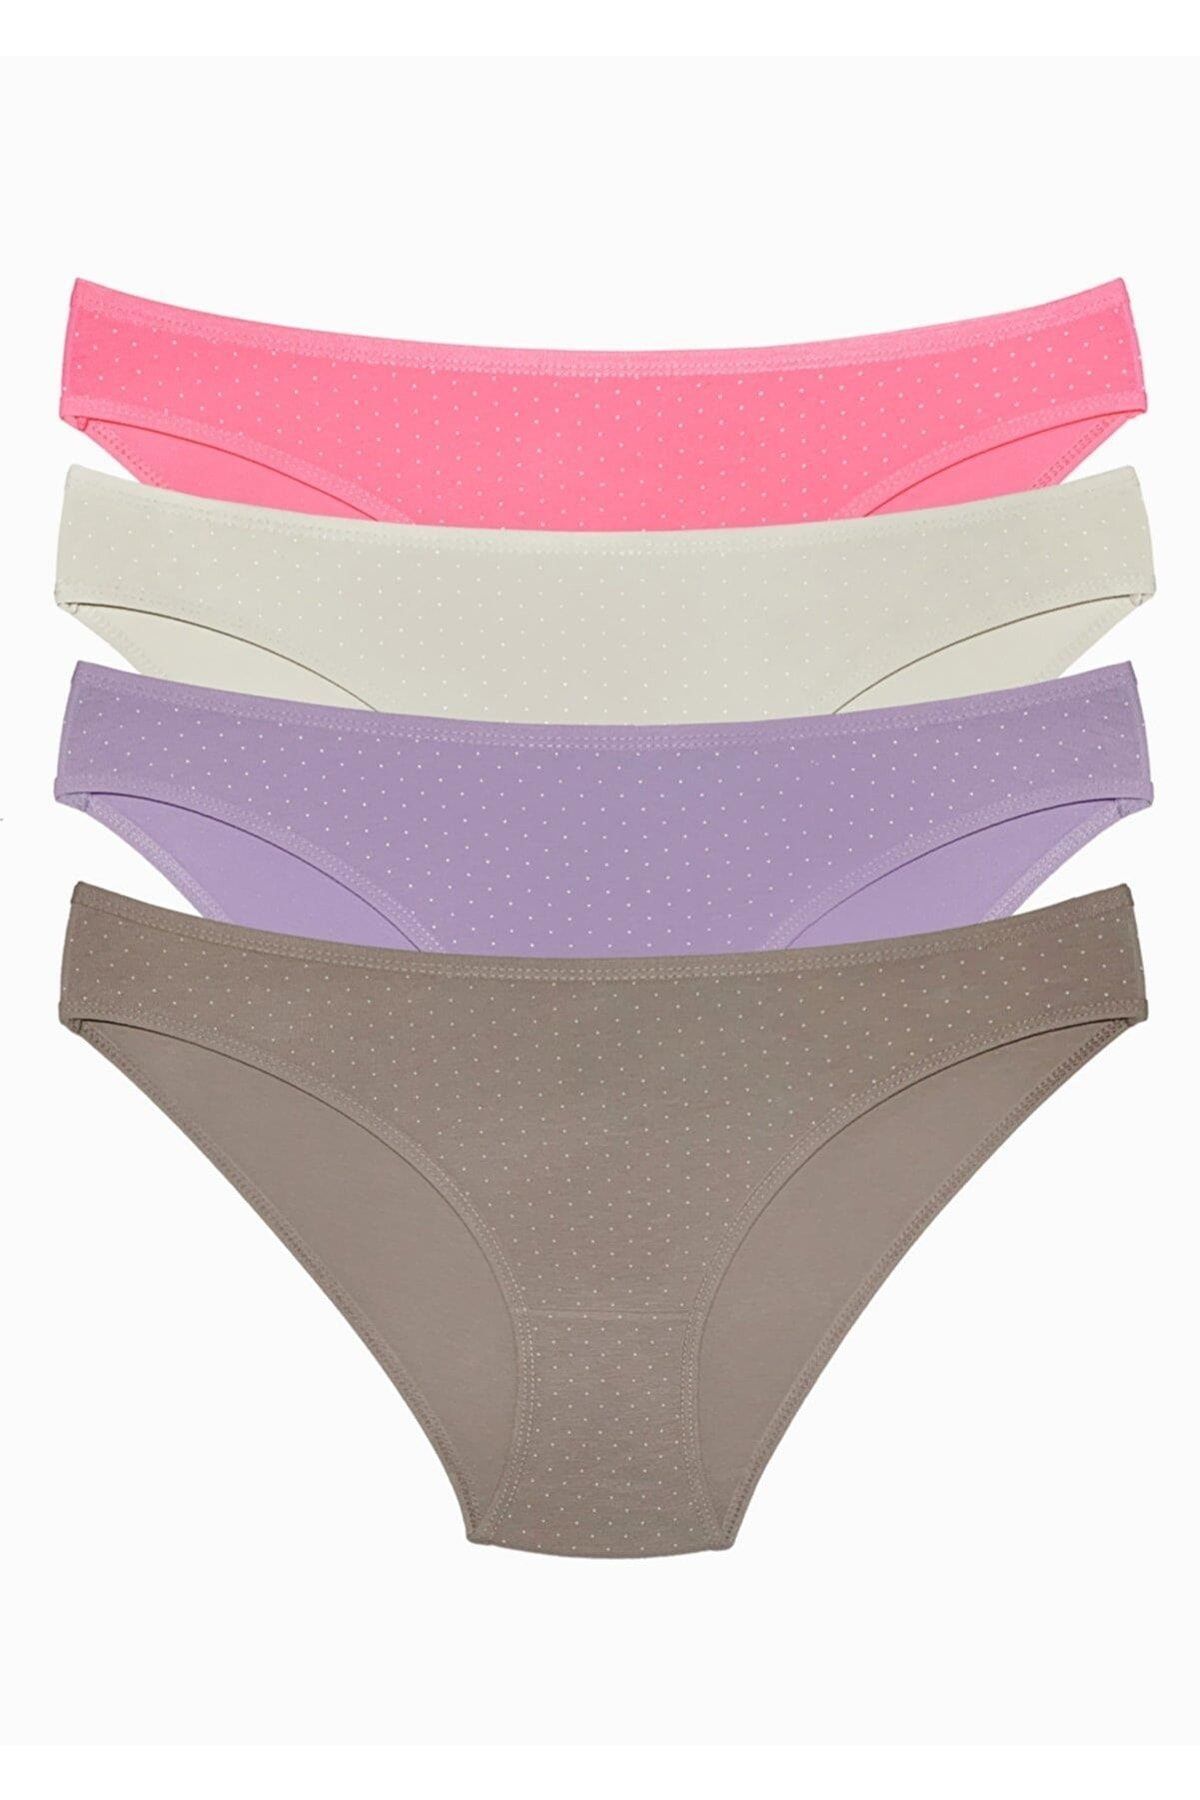 Women's Briefs 4pack Plain Panty Set Sexy Bikini Underwear for